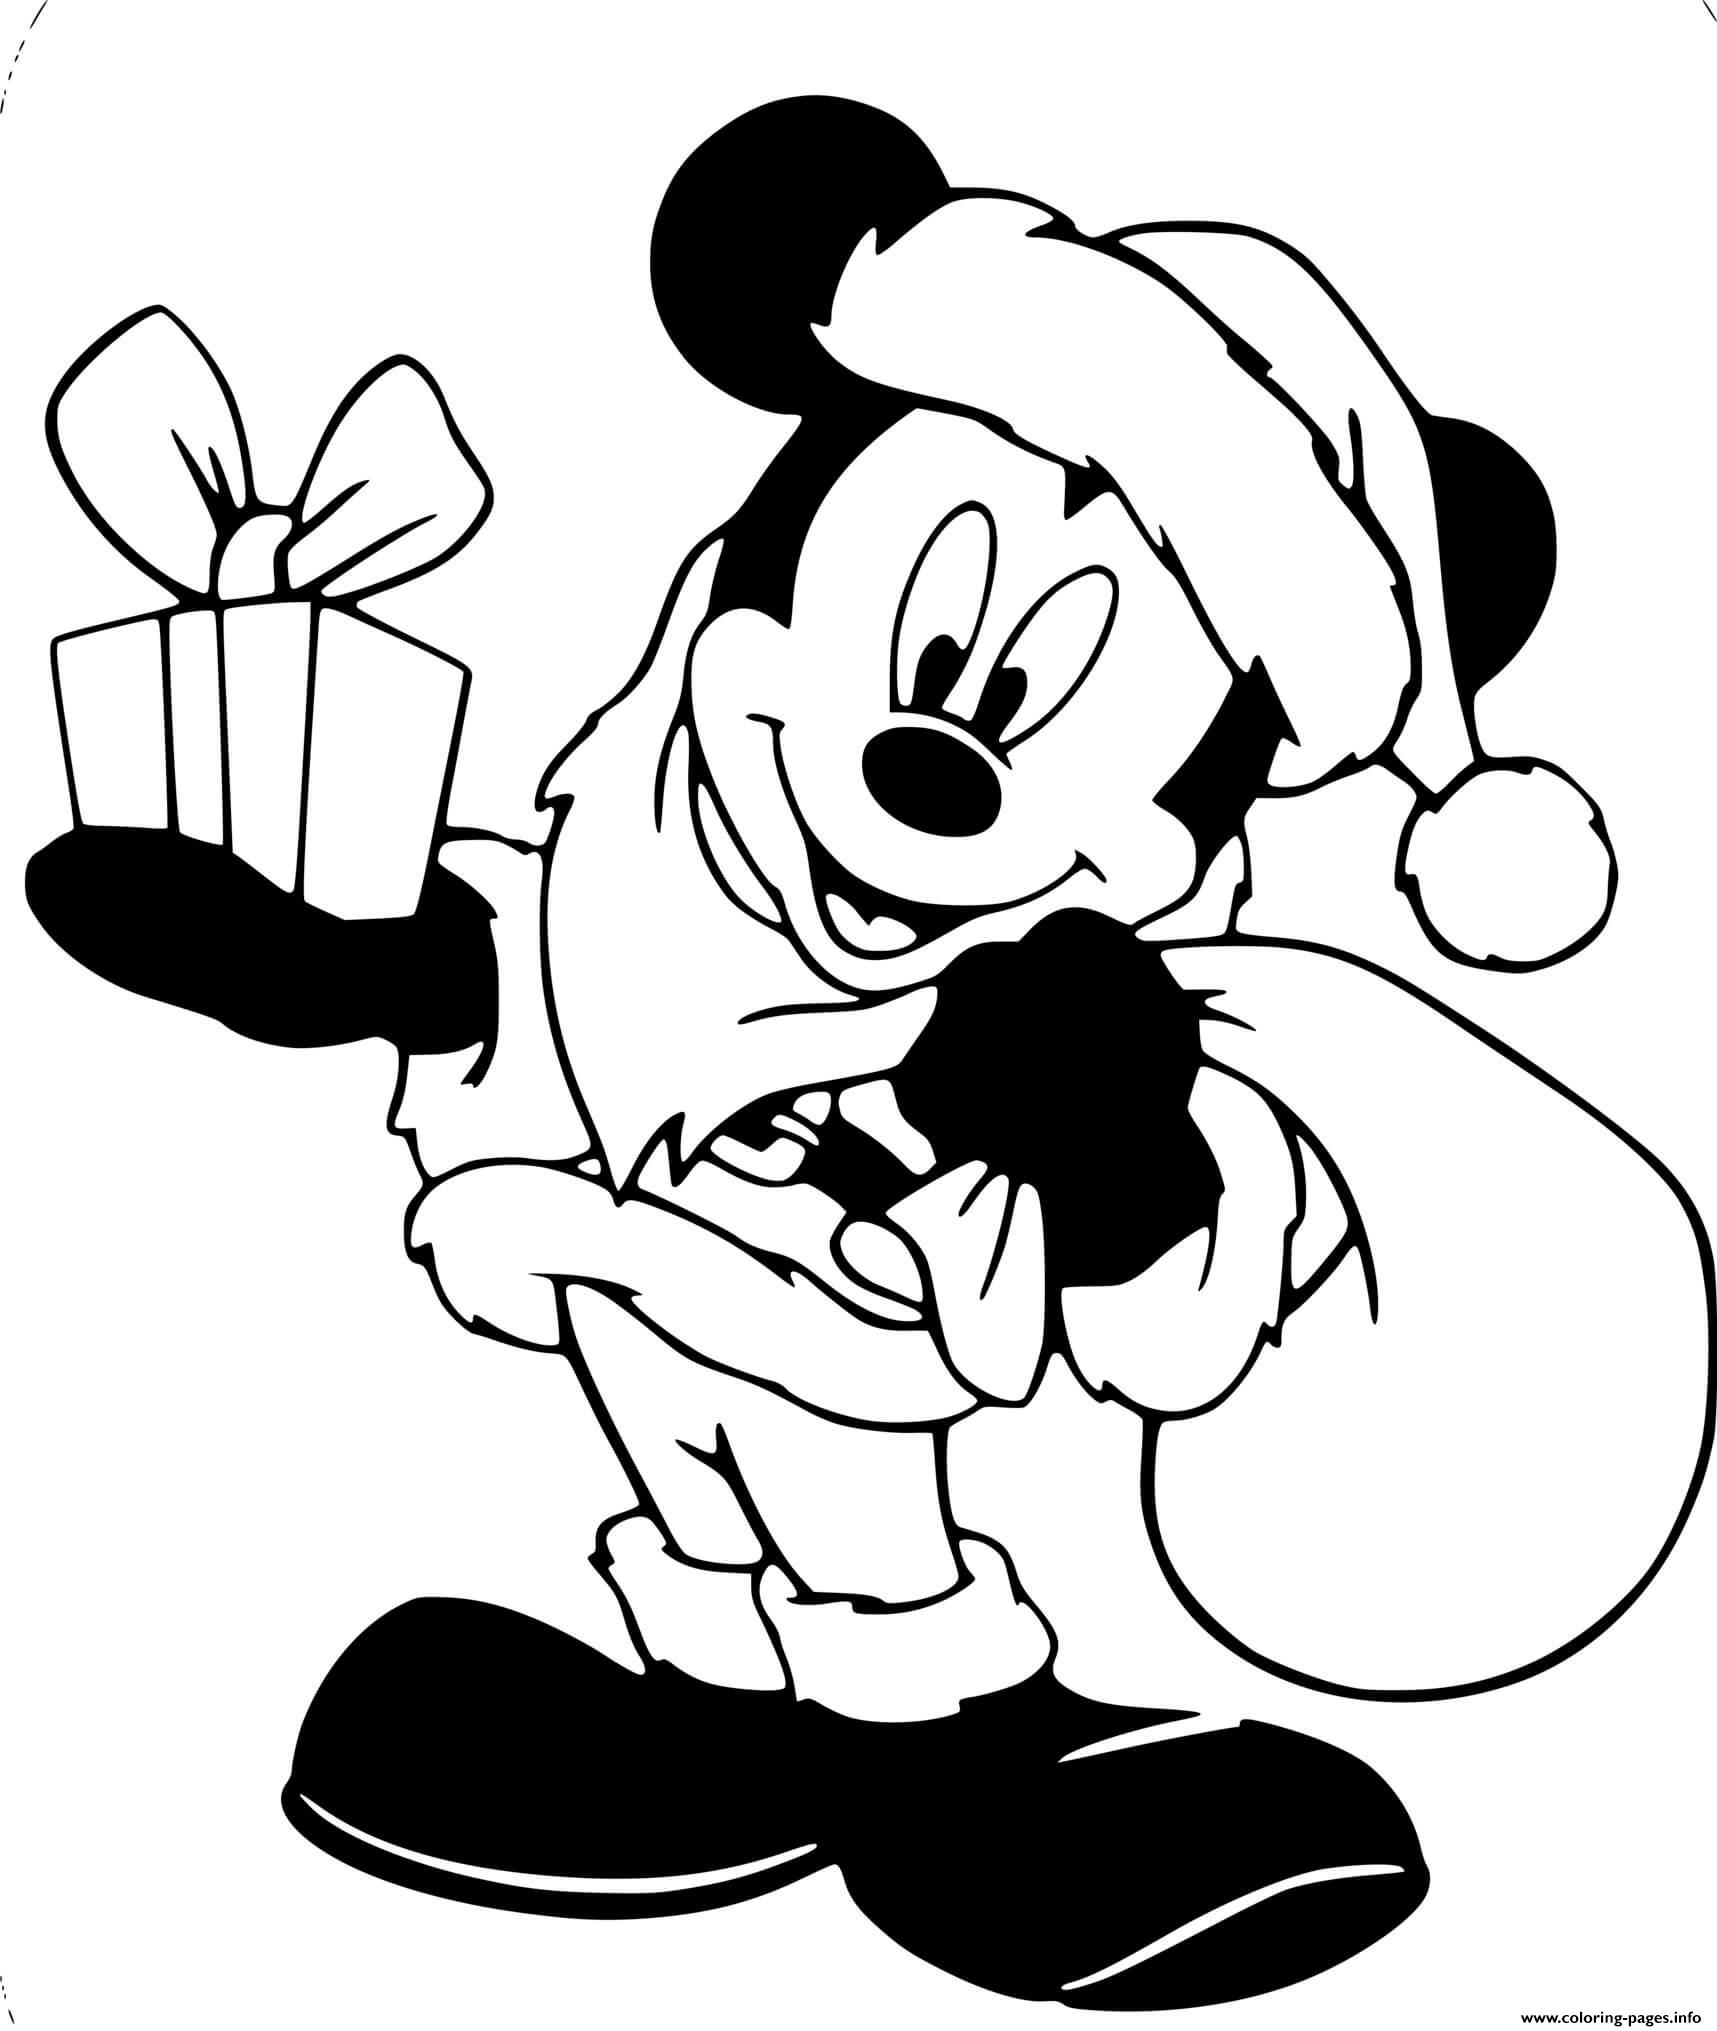 Mickey Mouse As Santa Claus coloring